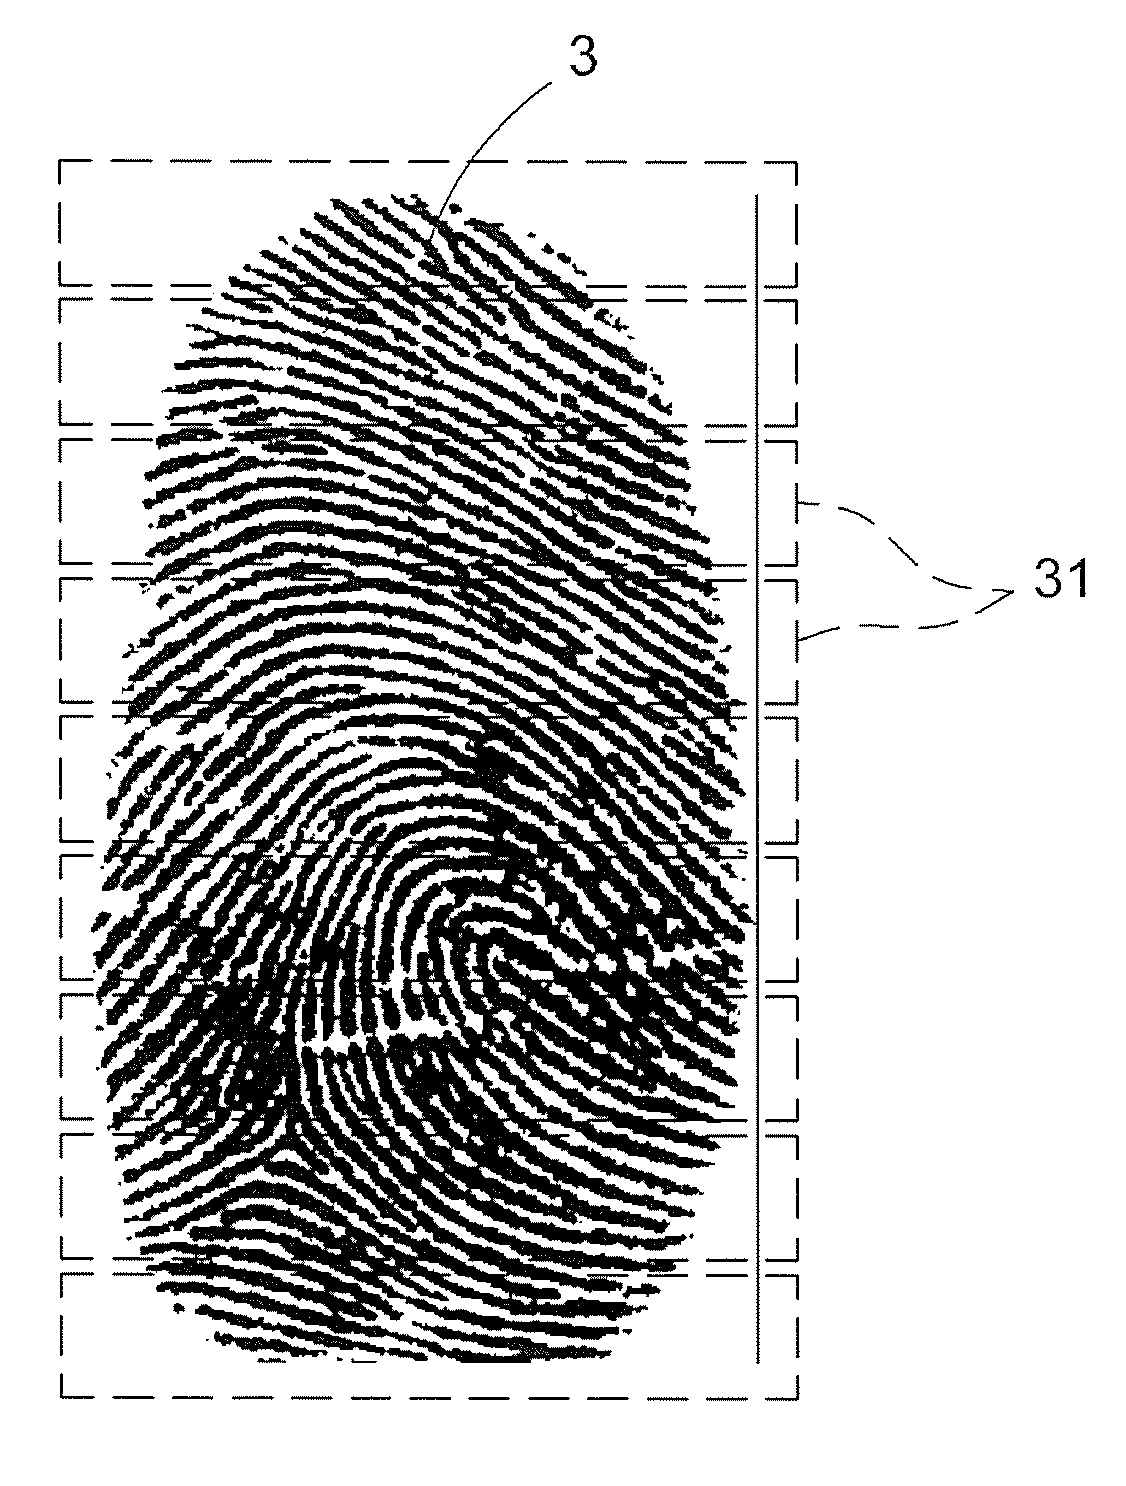 Fingerprint identification method and device thereof